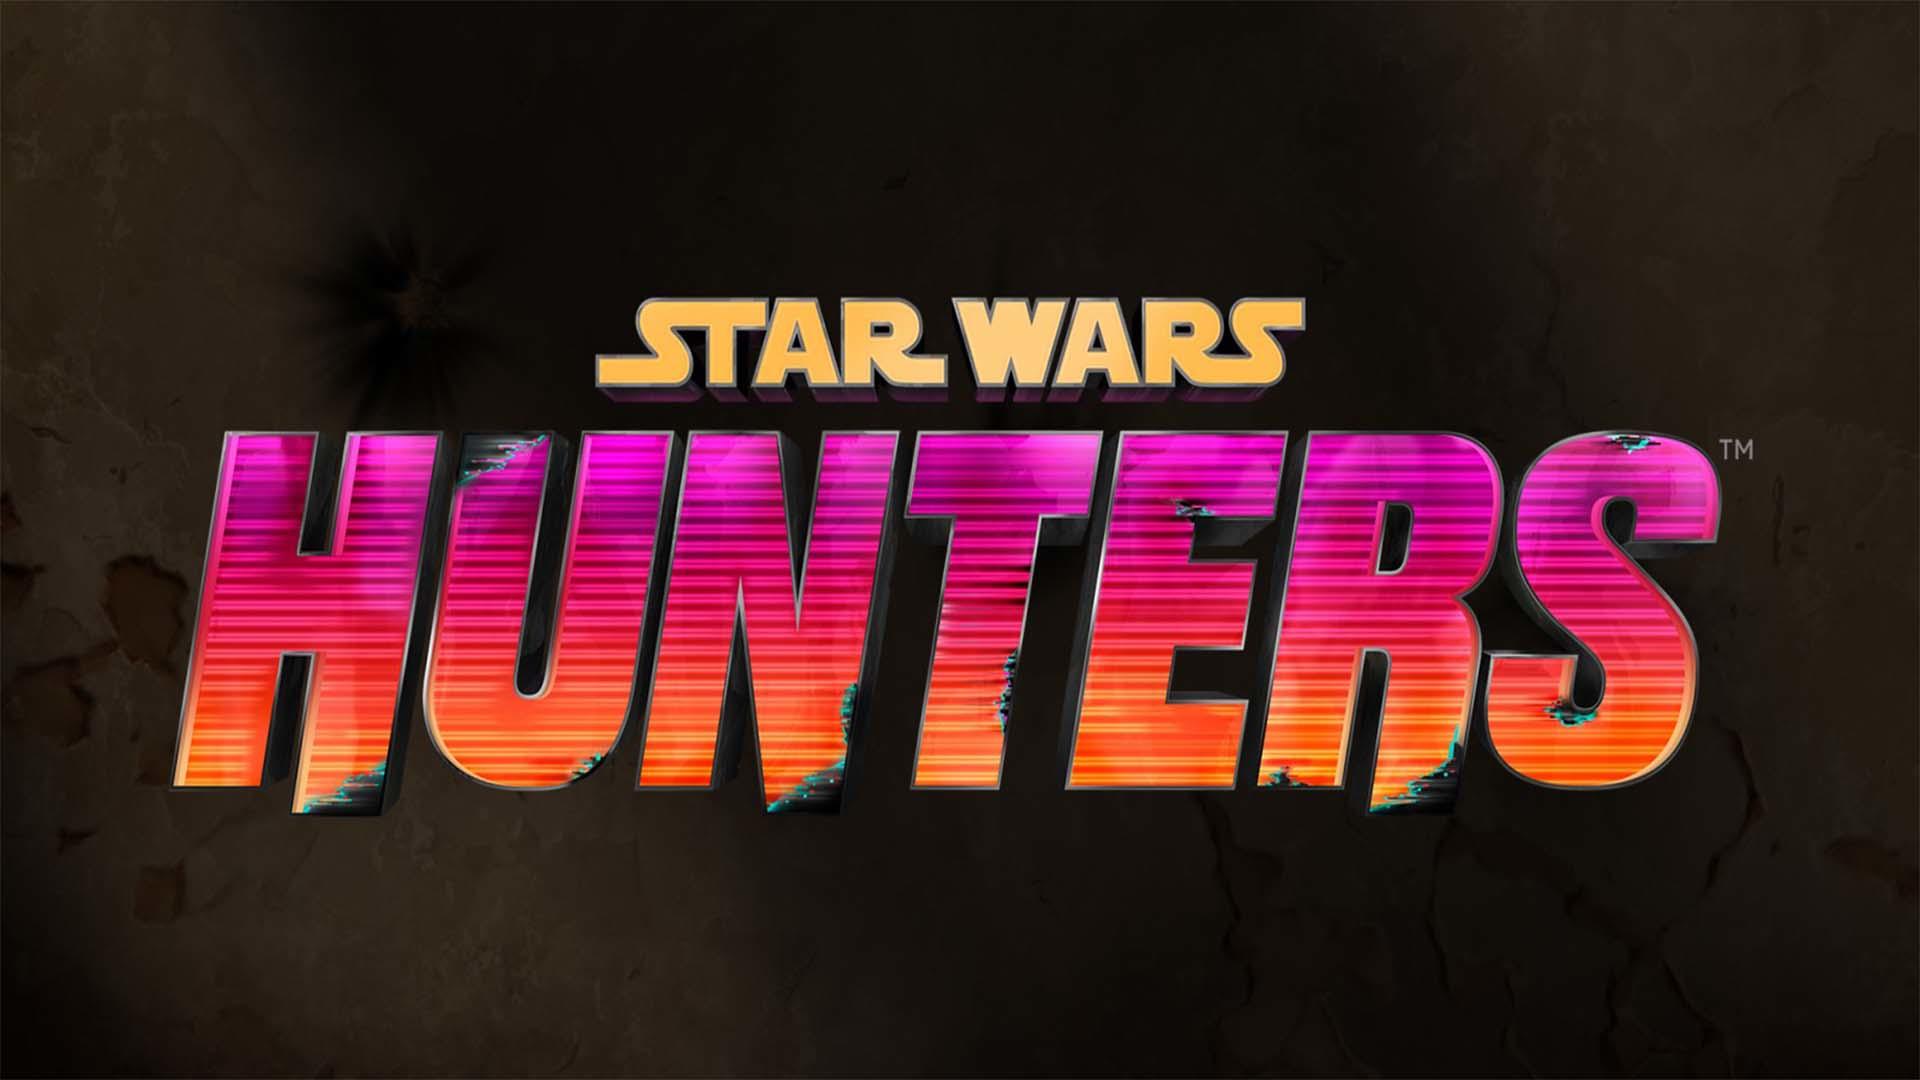 Banner of Star Wars: Hunters™ 